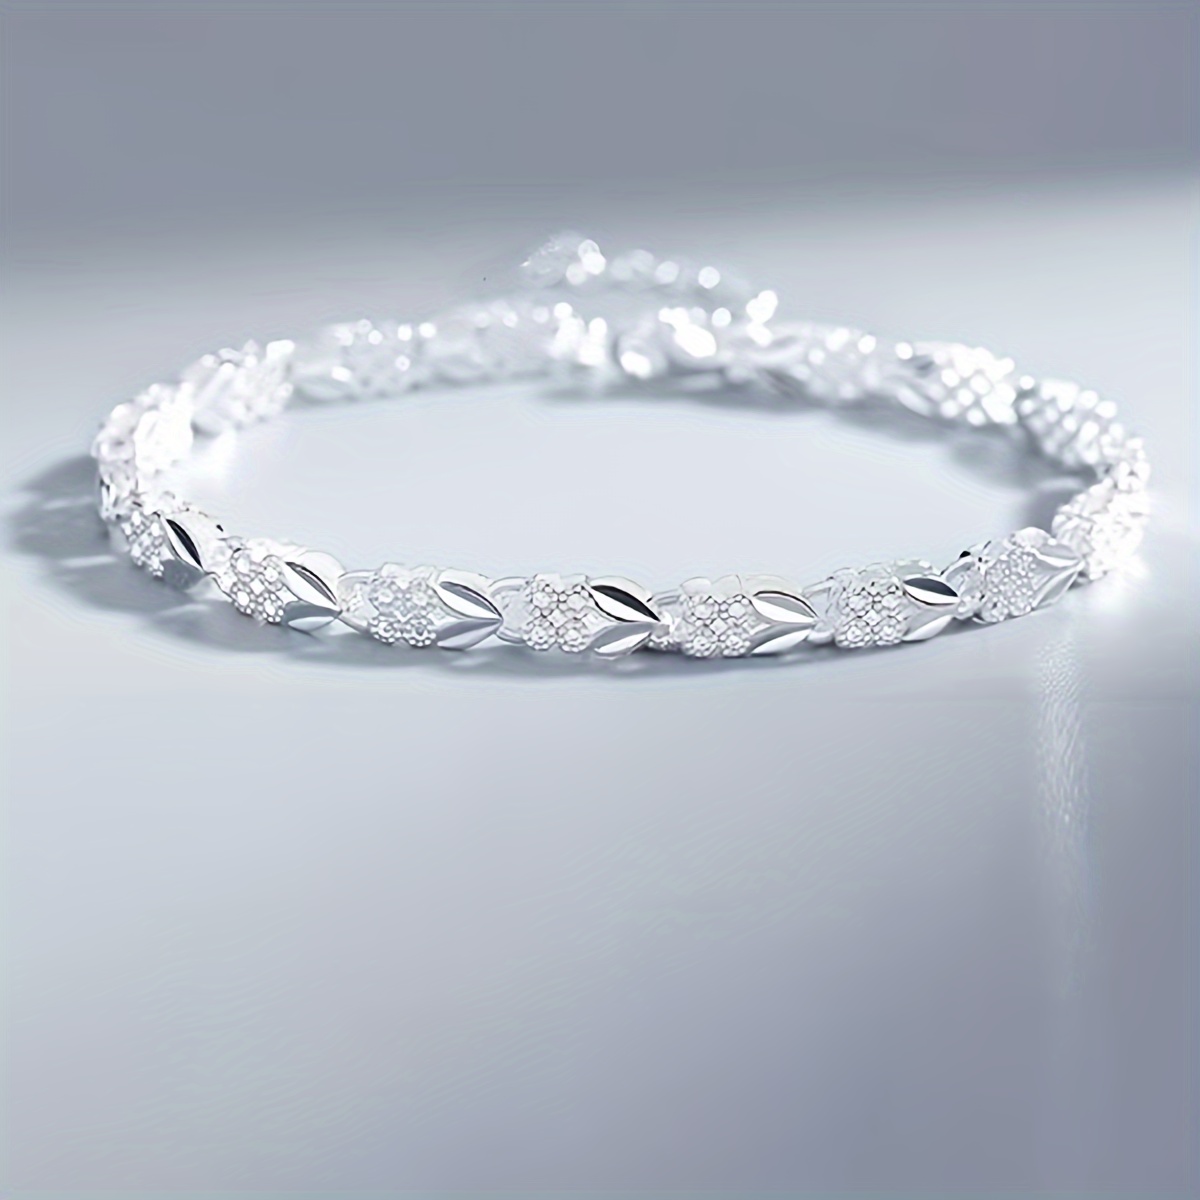 

Elegant Women's Silver Color Heart-shaped Leaf Bracelet Bangle Gift For Girlfriend's Birthday Valentine's Day